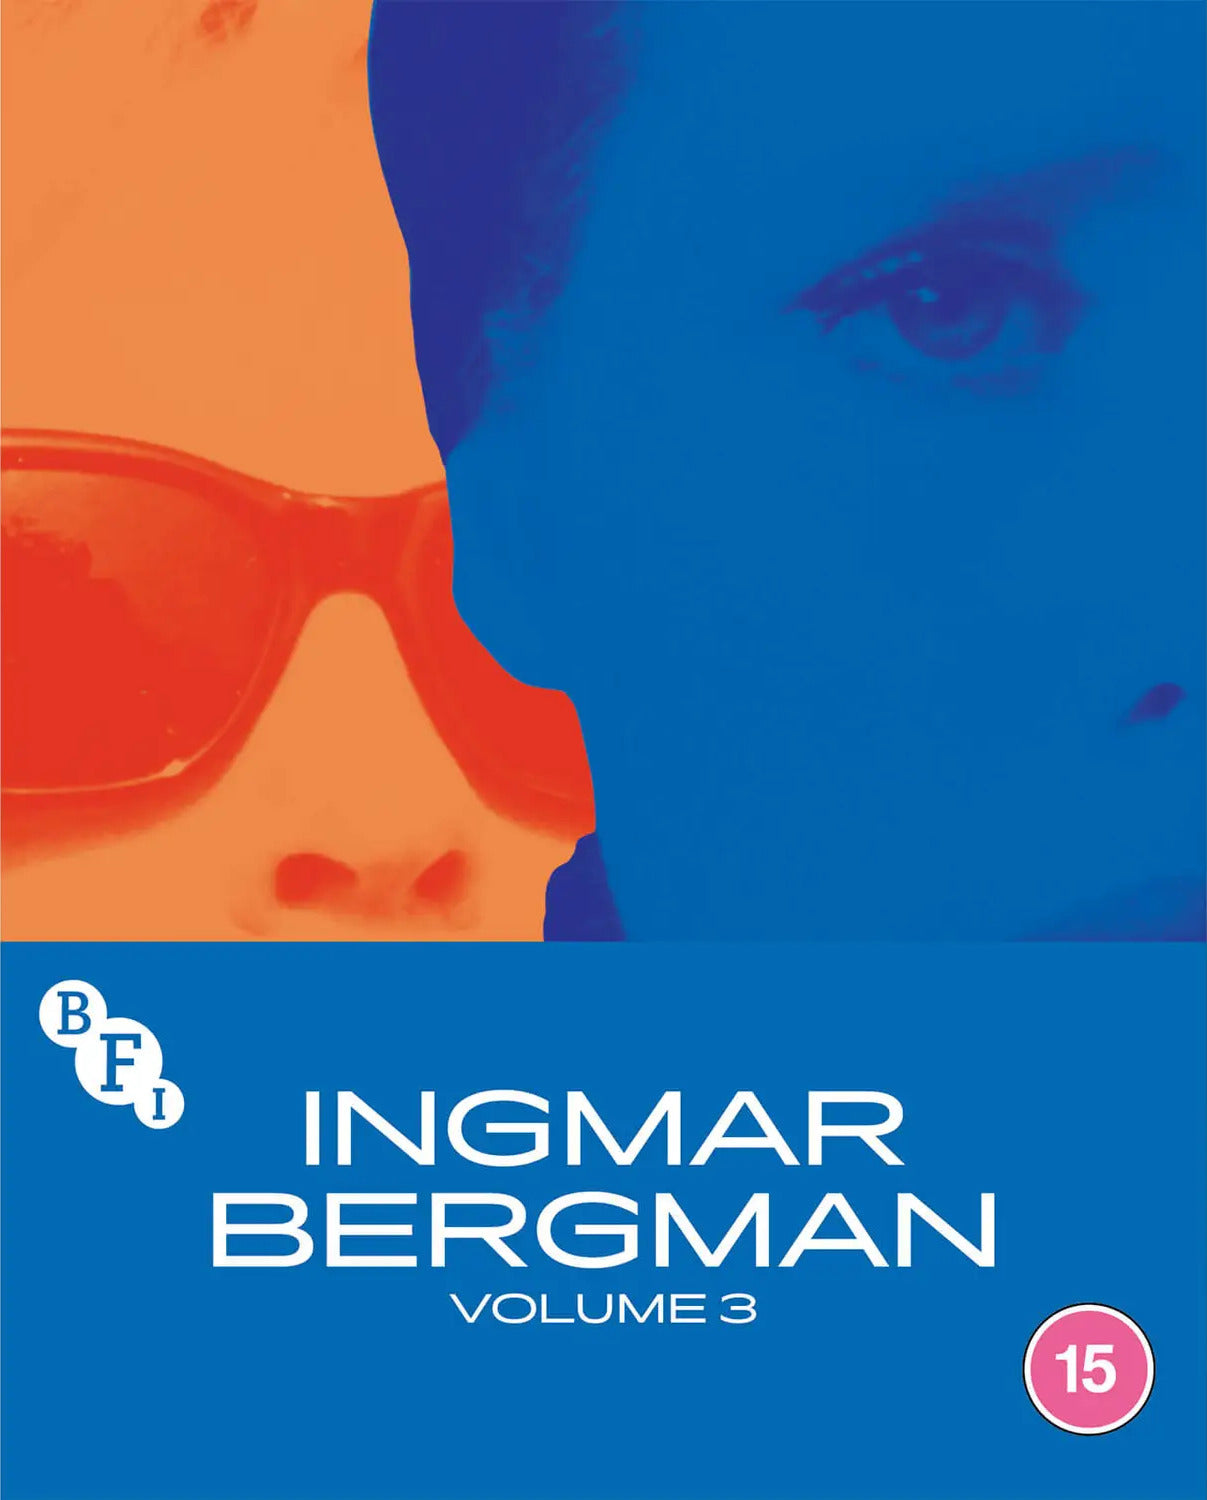 INGMAR BERGMAN VOLUME 3 (REGION B IMPORT - LIMITED EDITION) BLU-RAY